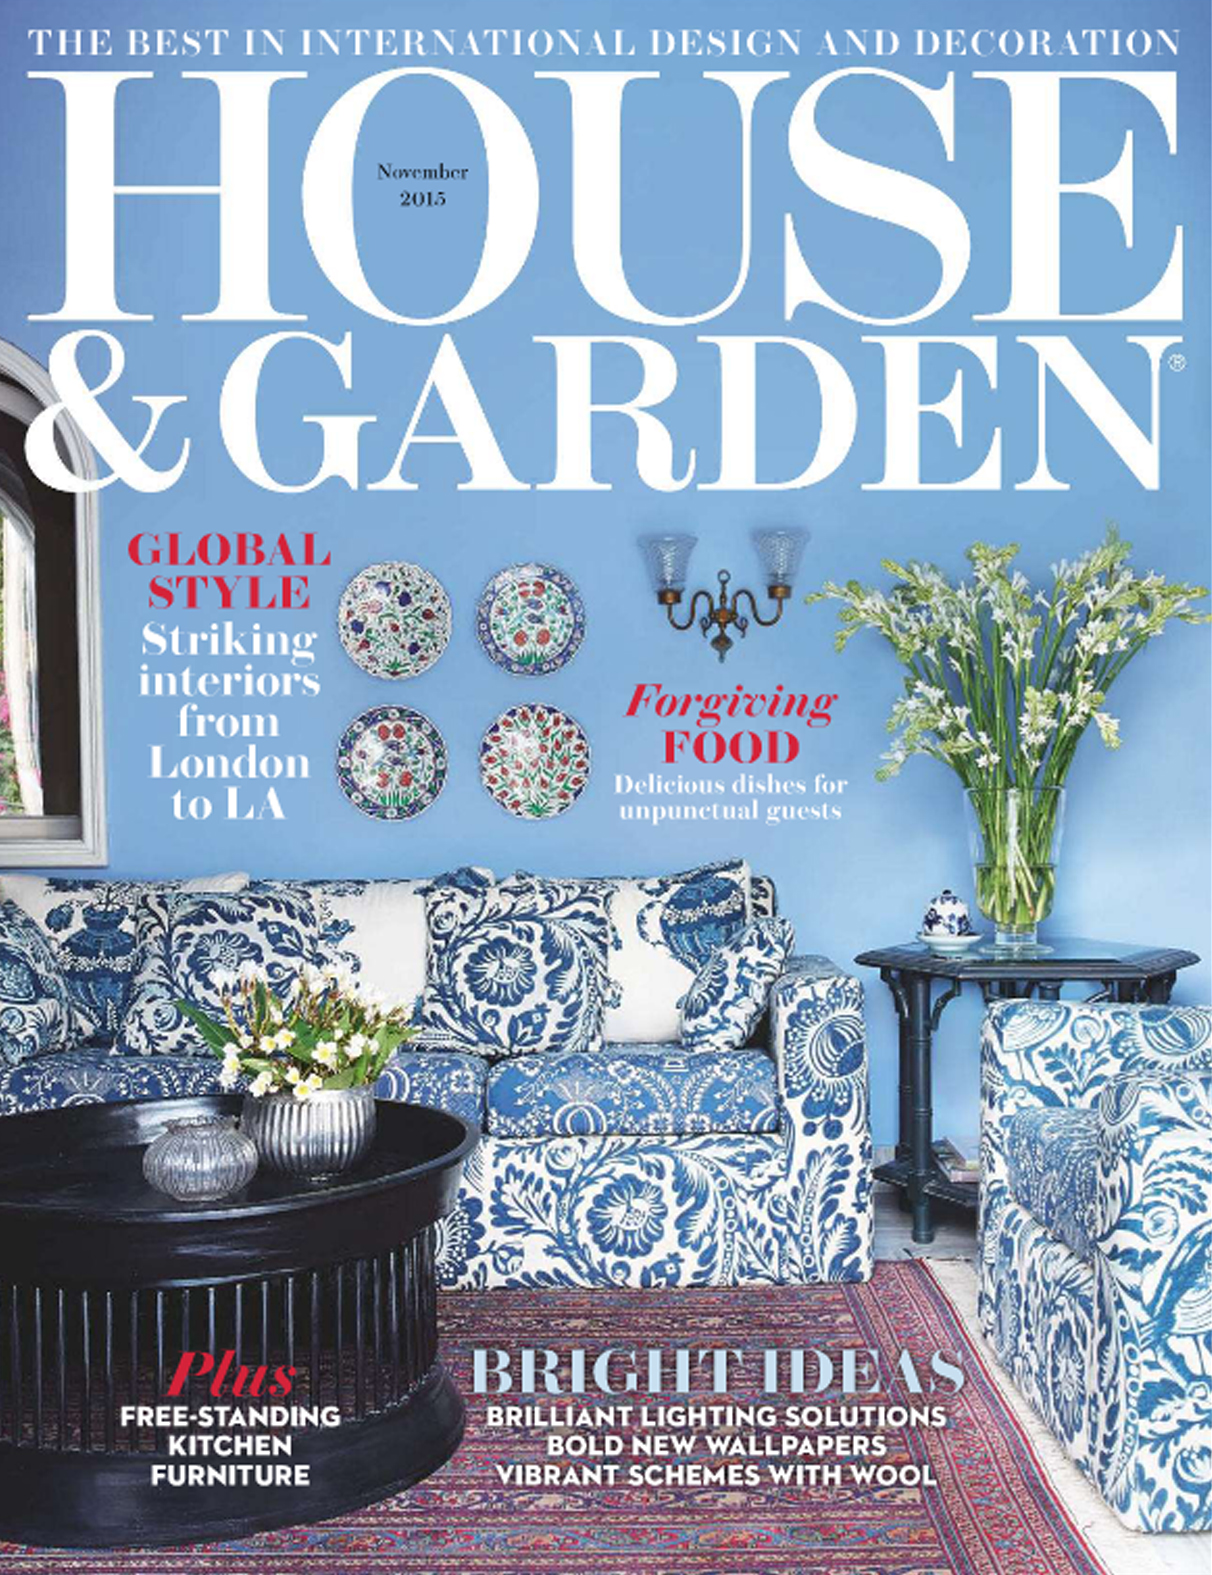 House and garden magazine Kingham bespoke kitchen design feature November 2015